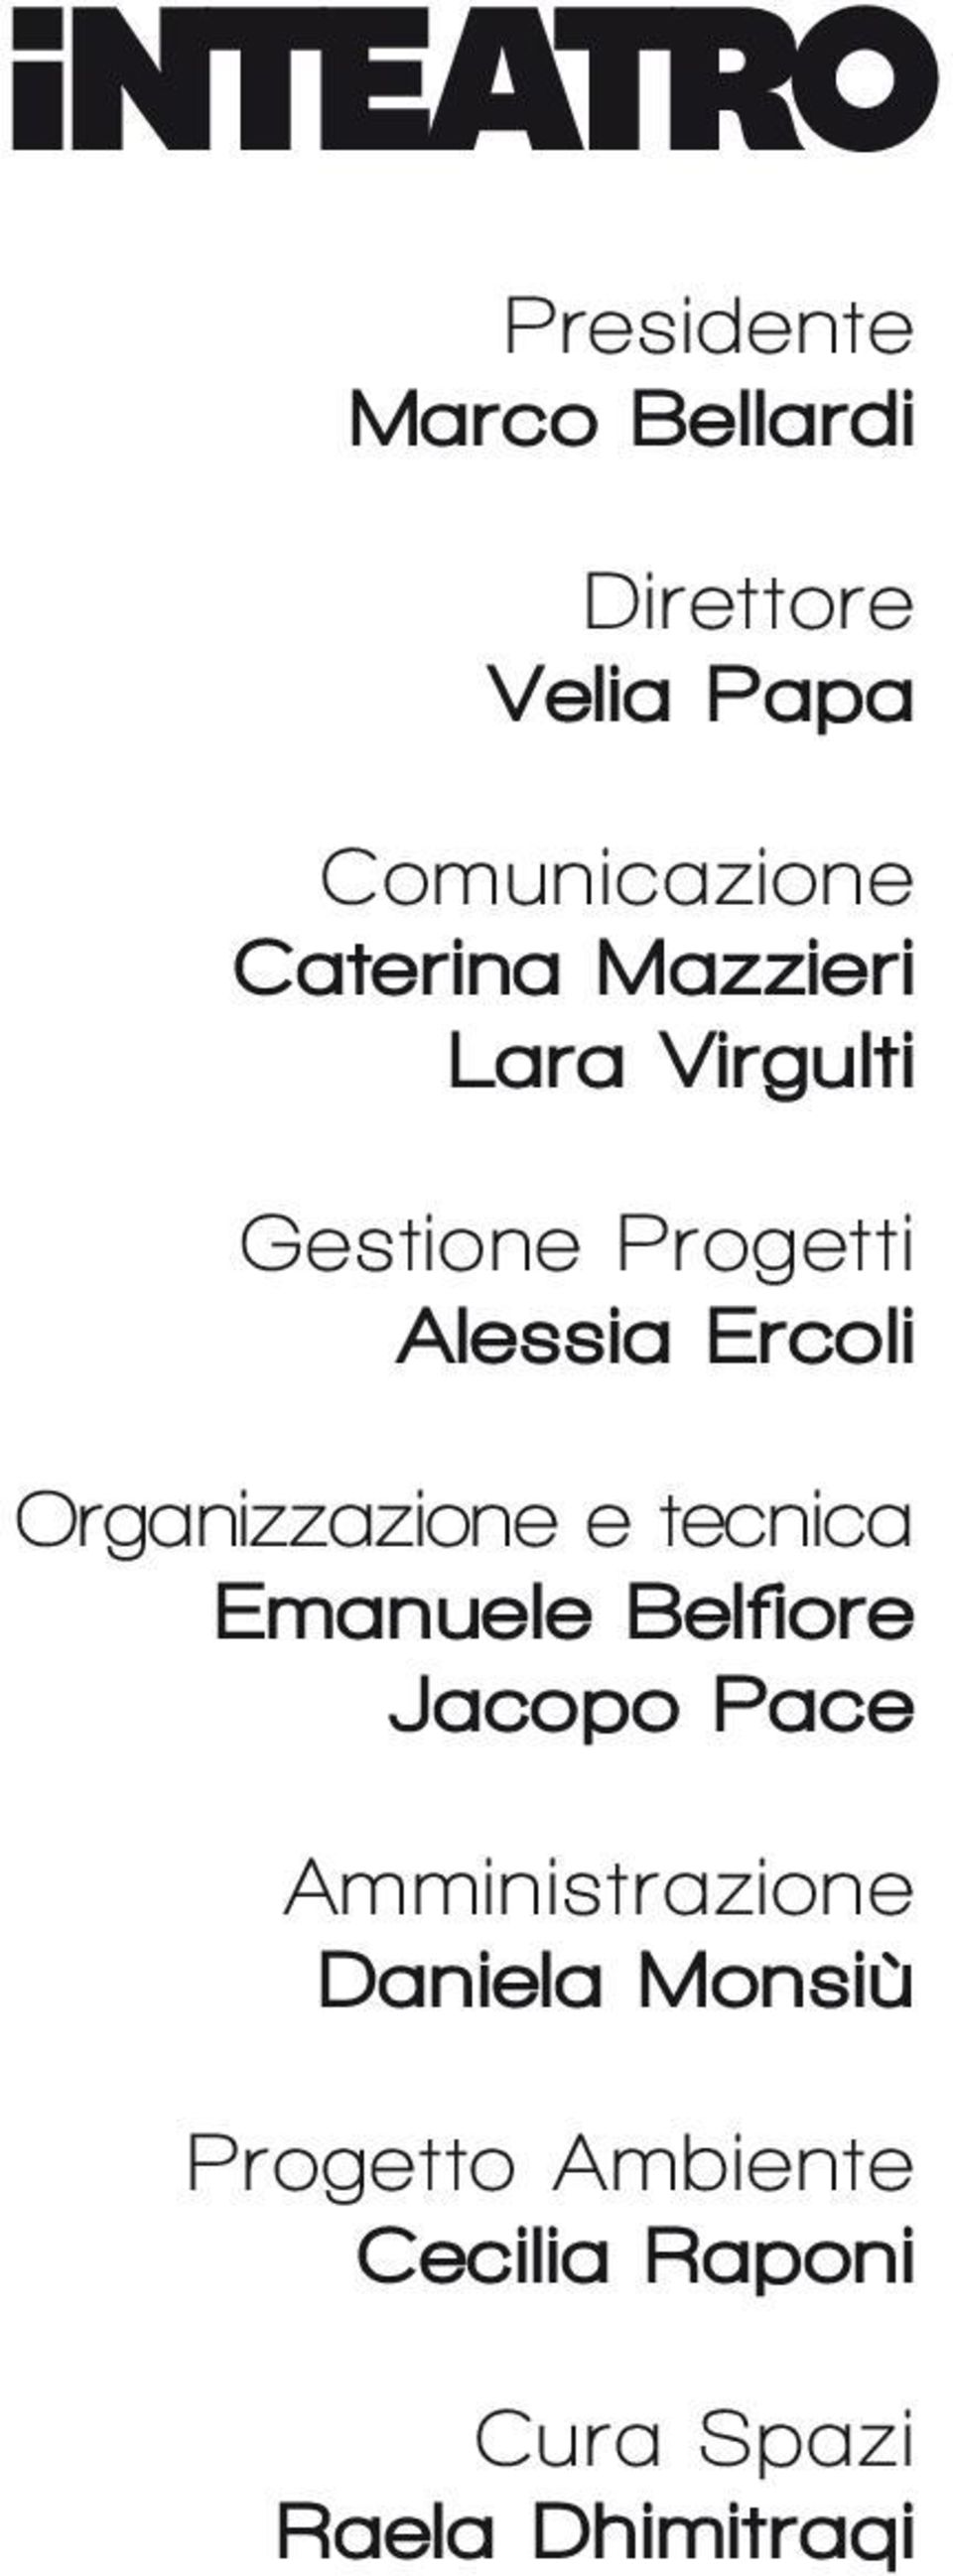 Organizzazione e tecnica Emanuele Belfiore Jacopo Pace